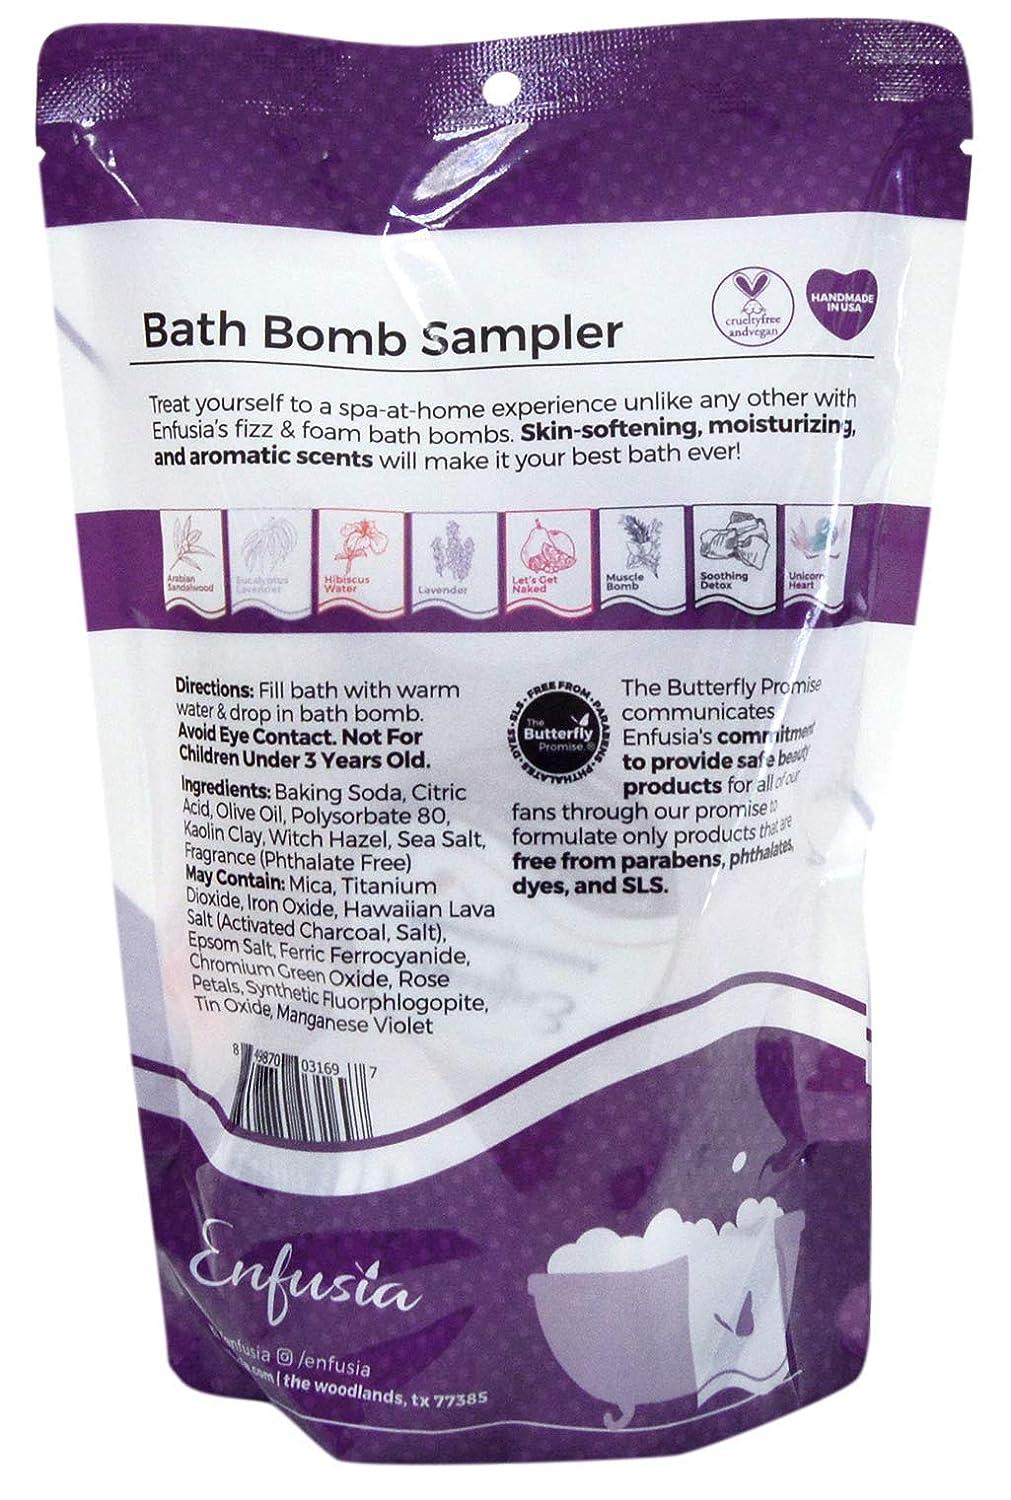 Bath Bomb Sampler